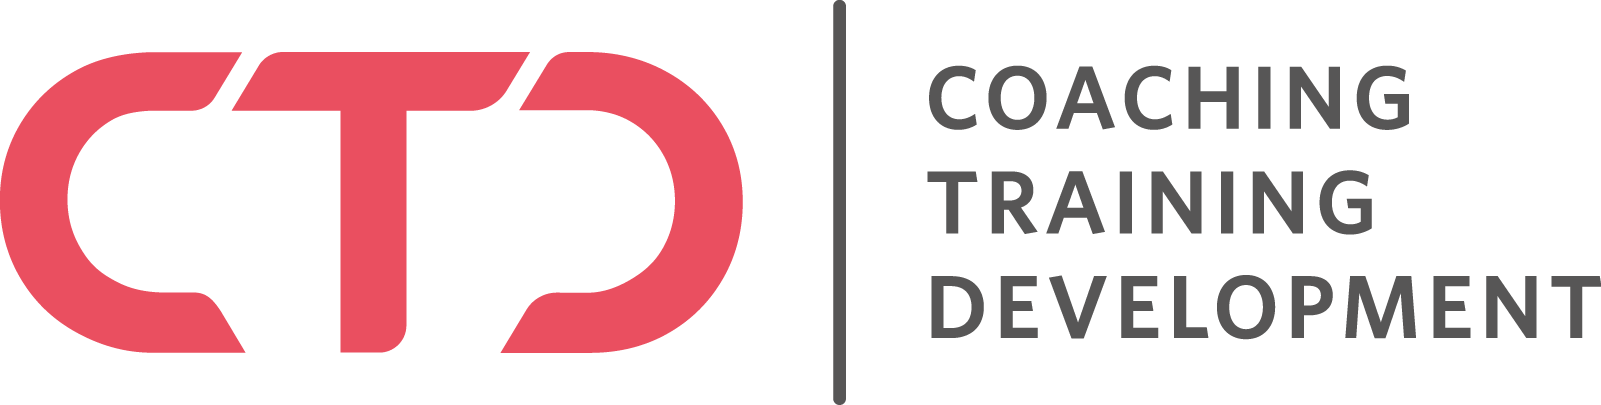 Coaching Training and Development logo